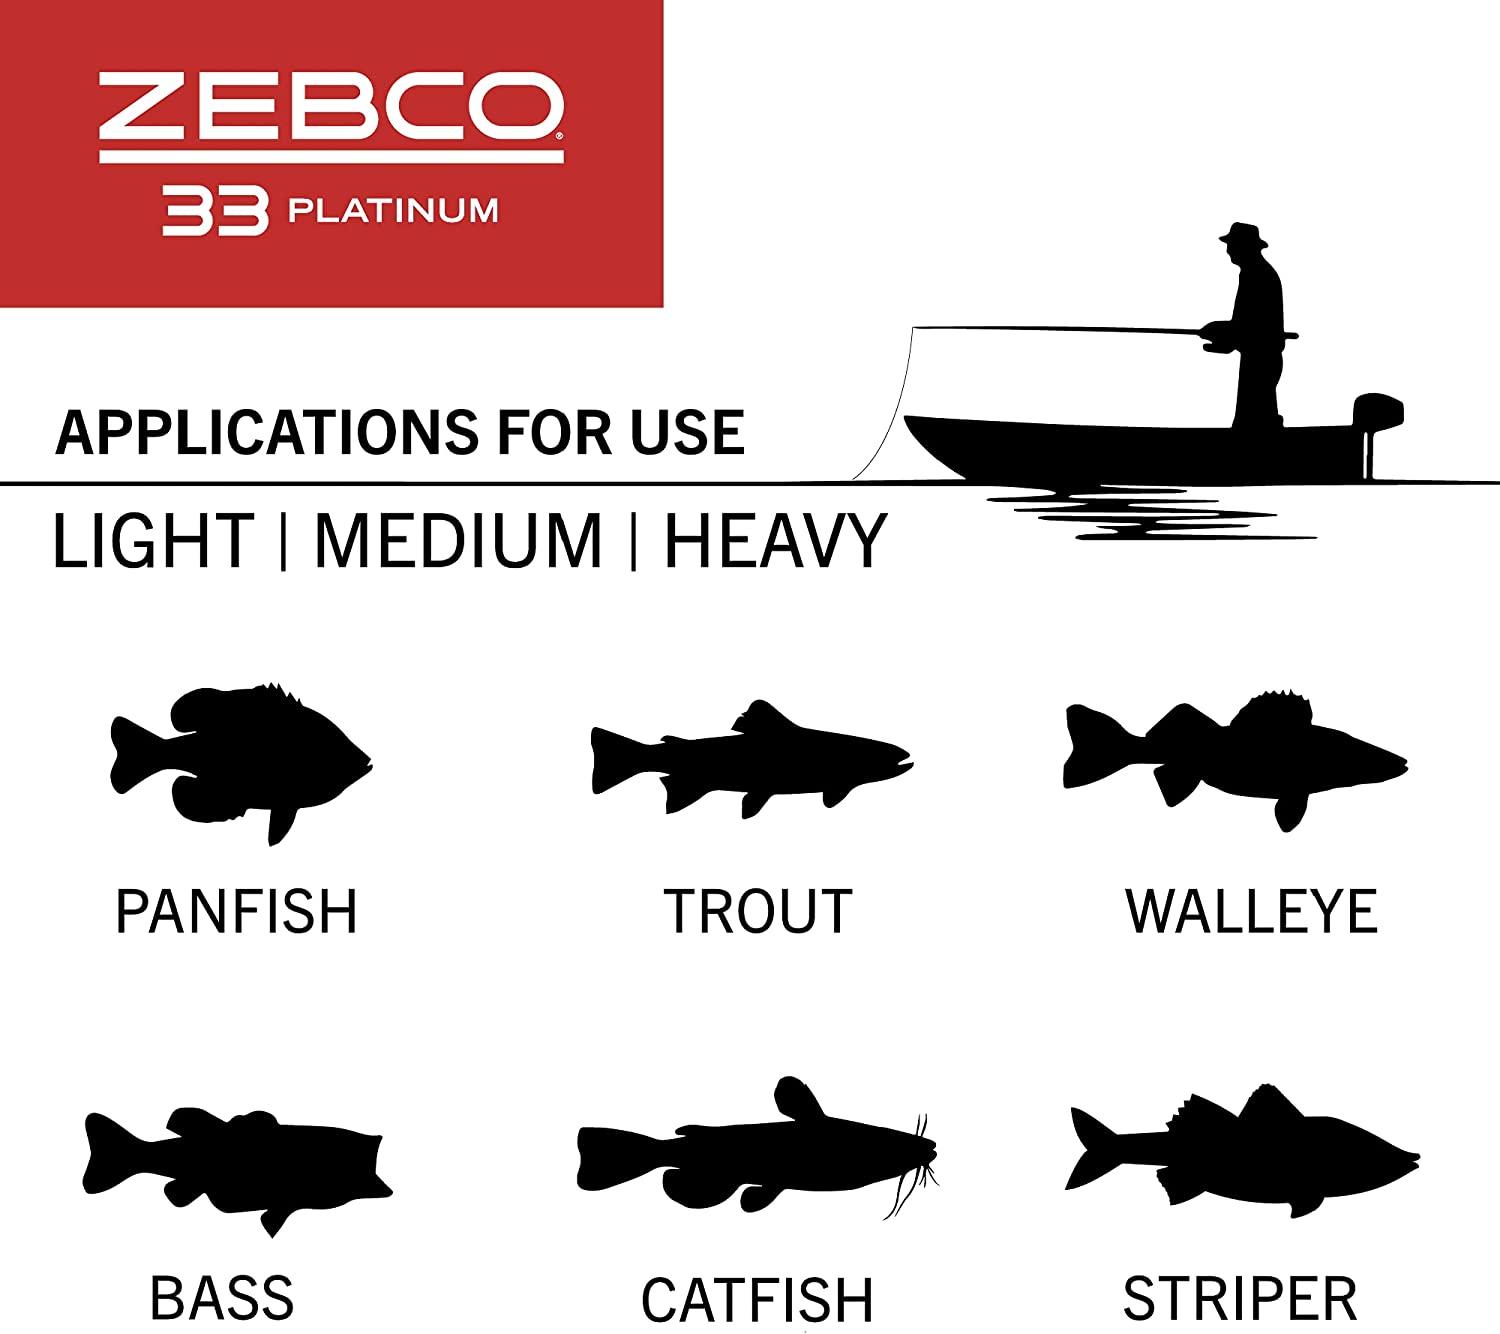 Zebco 33 Platinum Spincast Reel, 5 Ball Bearings (4 + Clutch